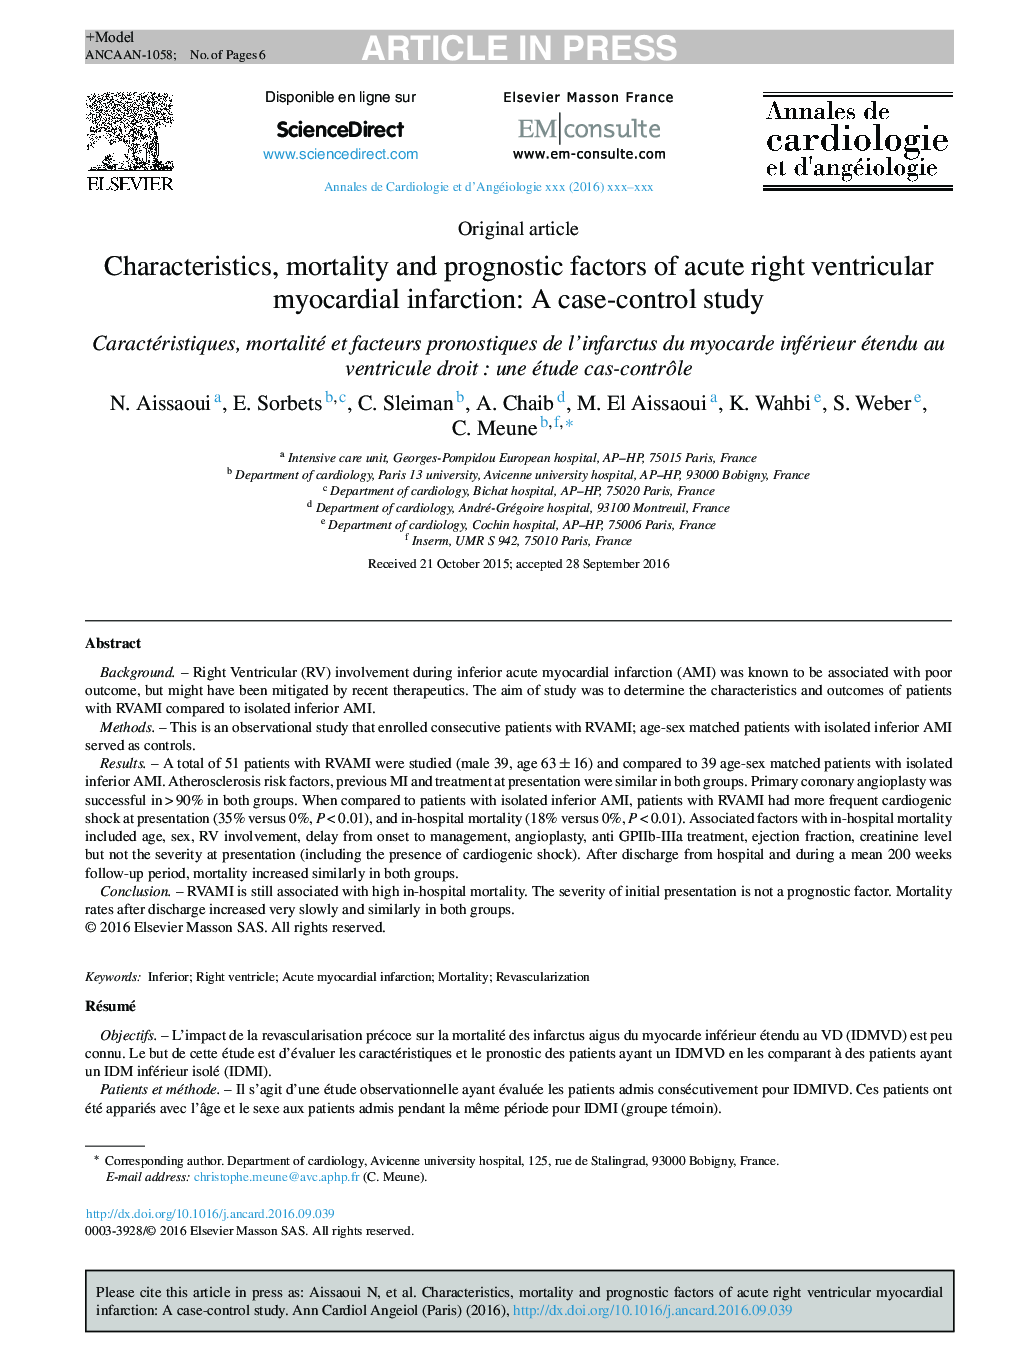 Characteristics, mortality and prognostic factors of acute right ventricular myocardial infarction: A case-control study